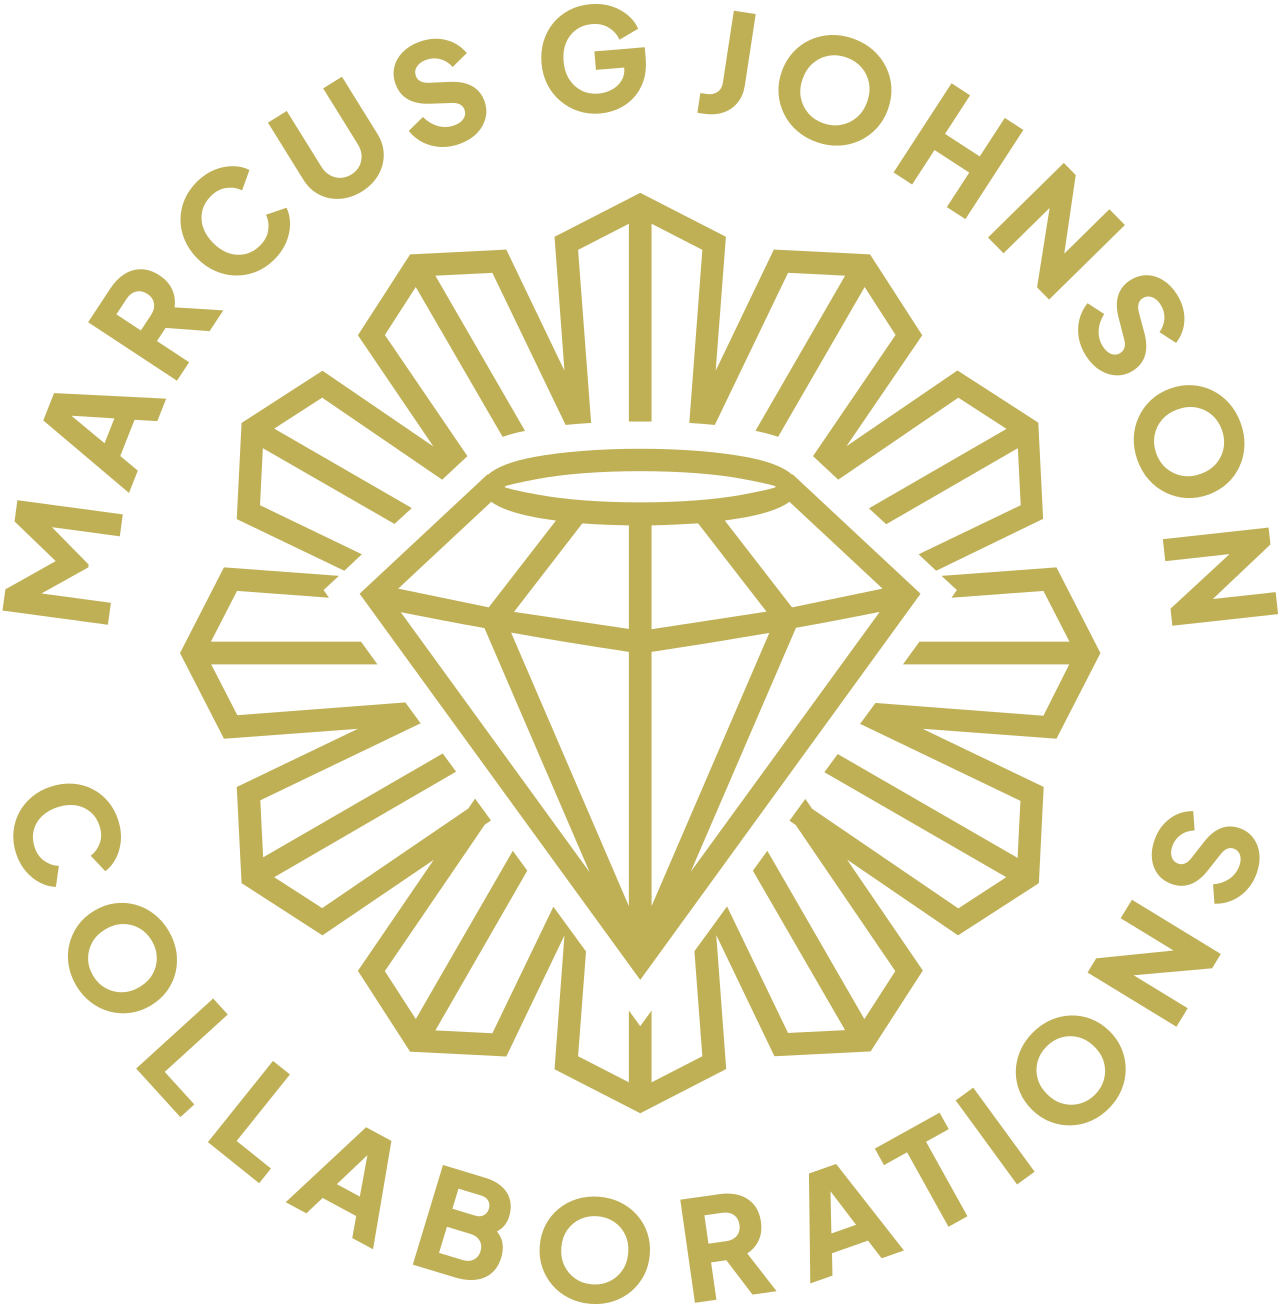 Marcus G Johnson's logo